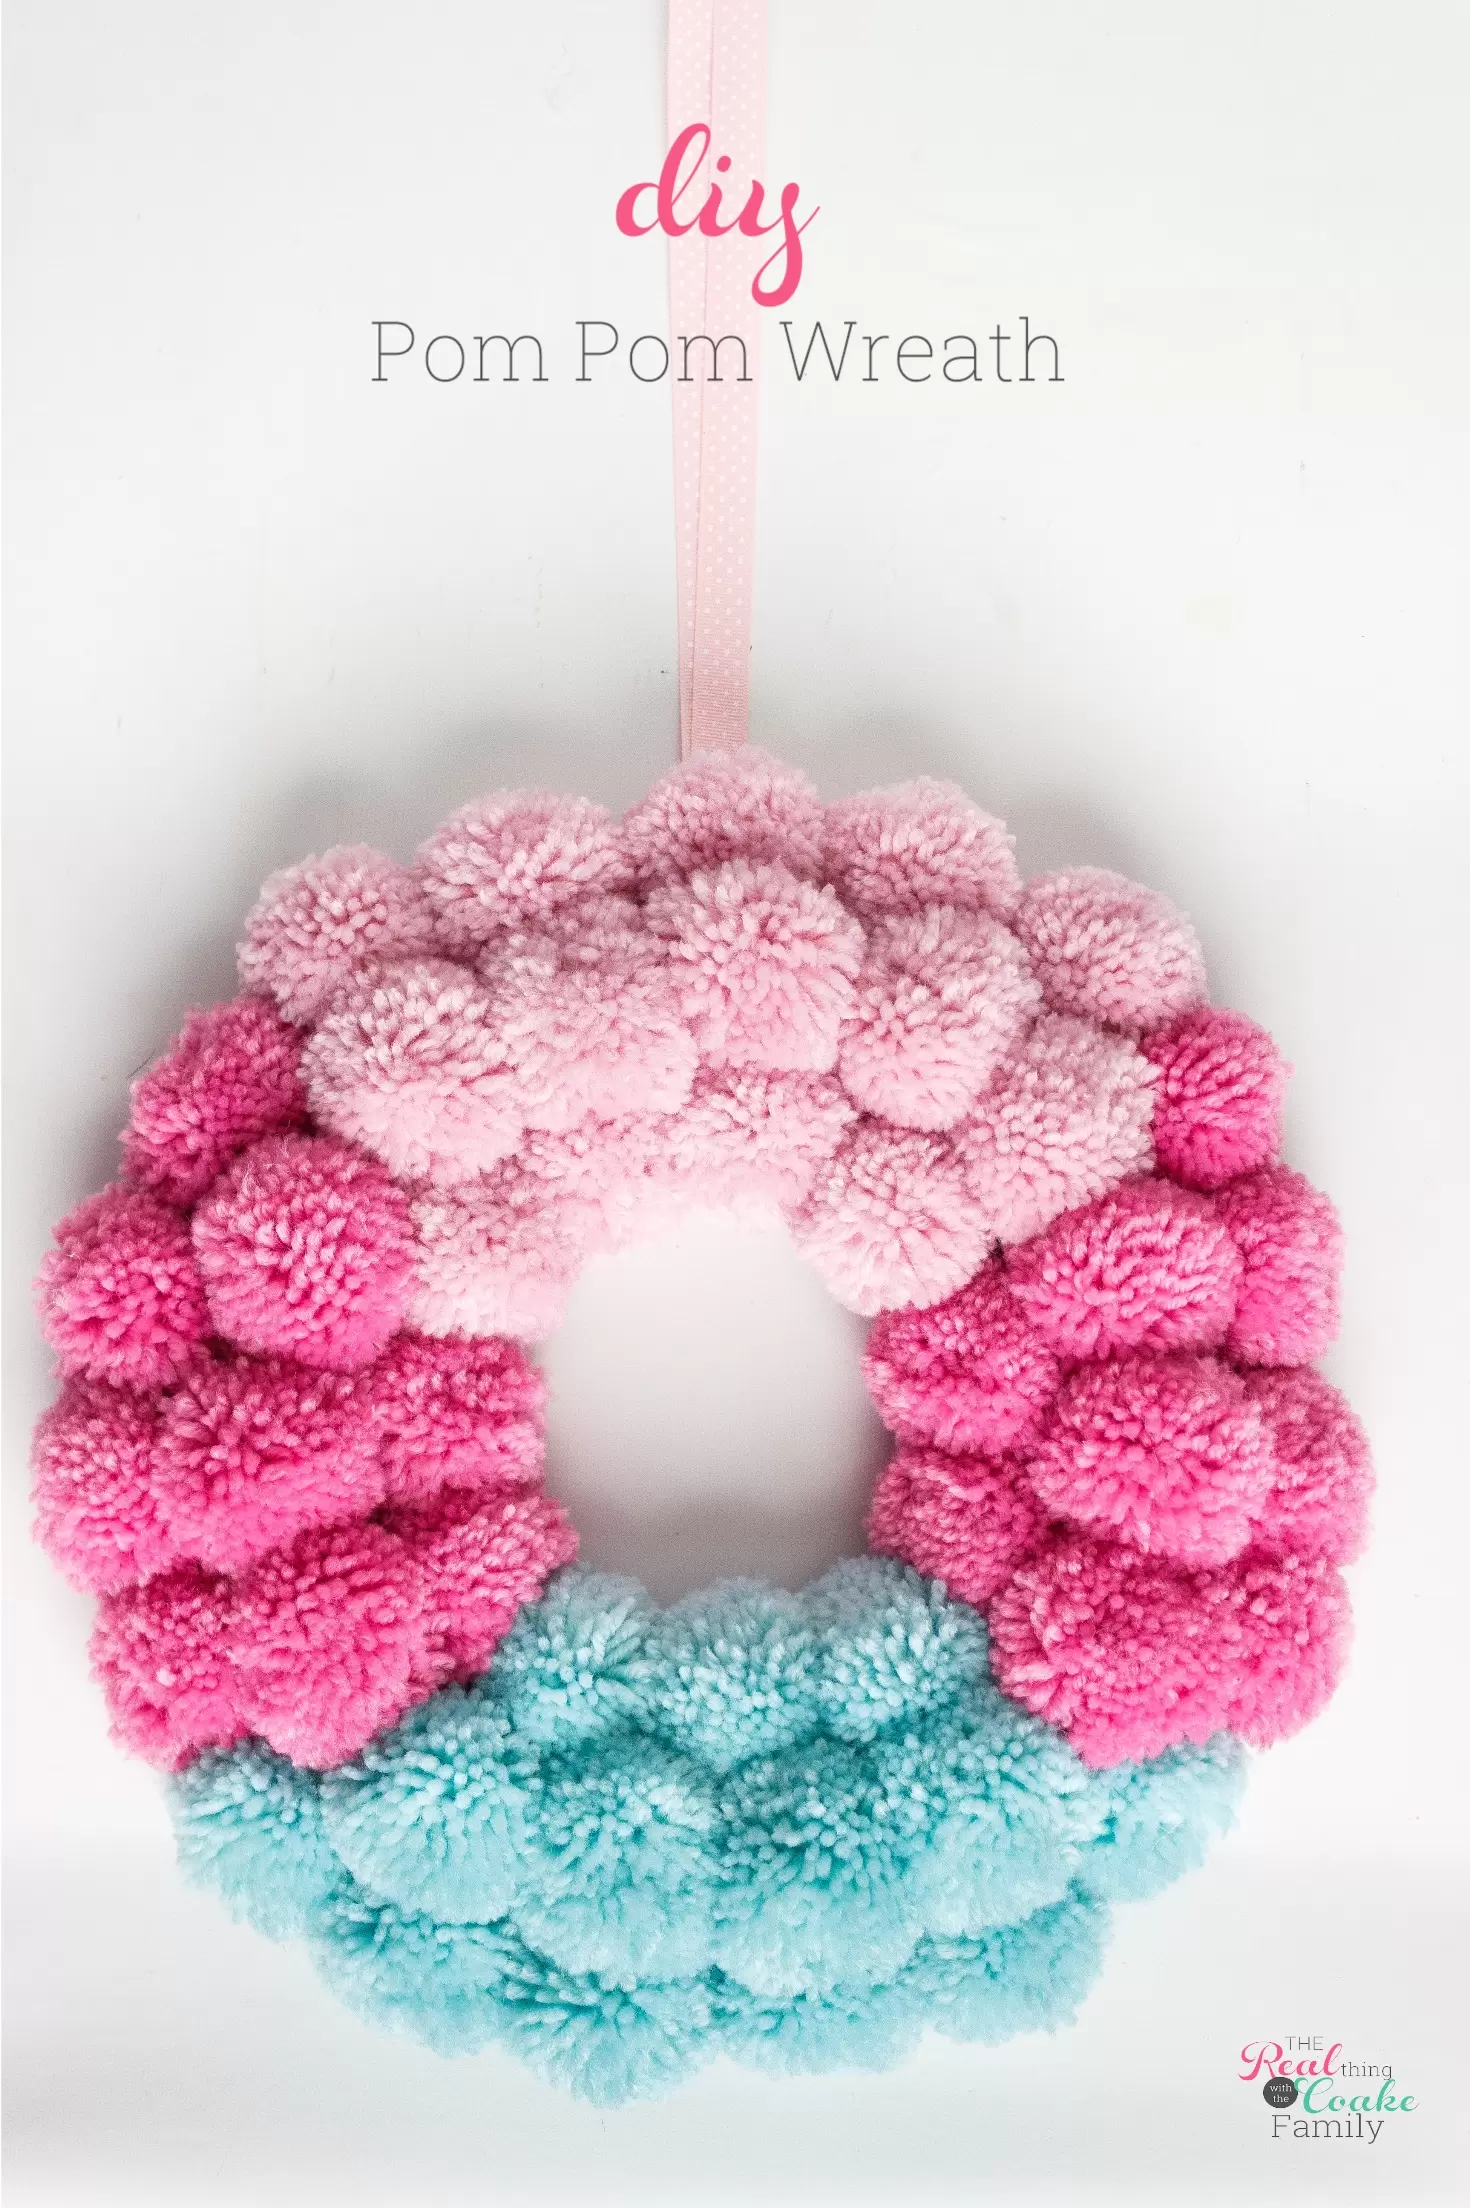 How to Make a Fun Pom Pom Wreath